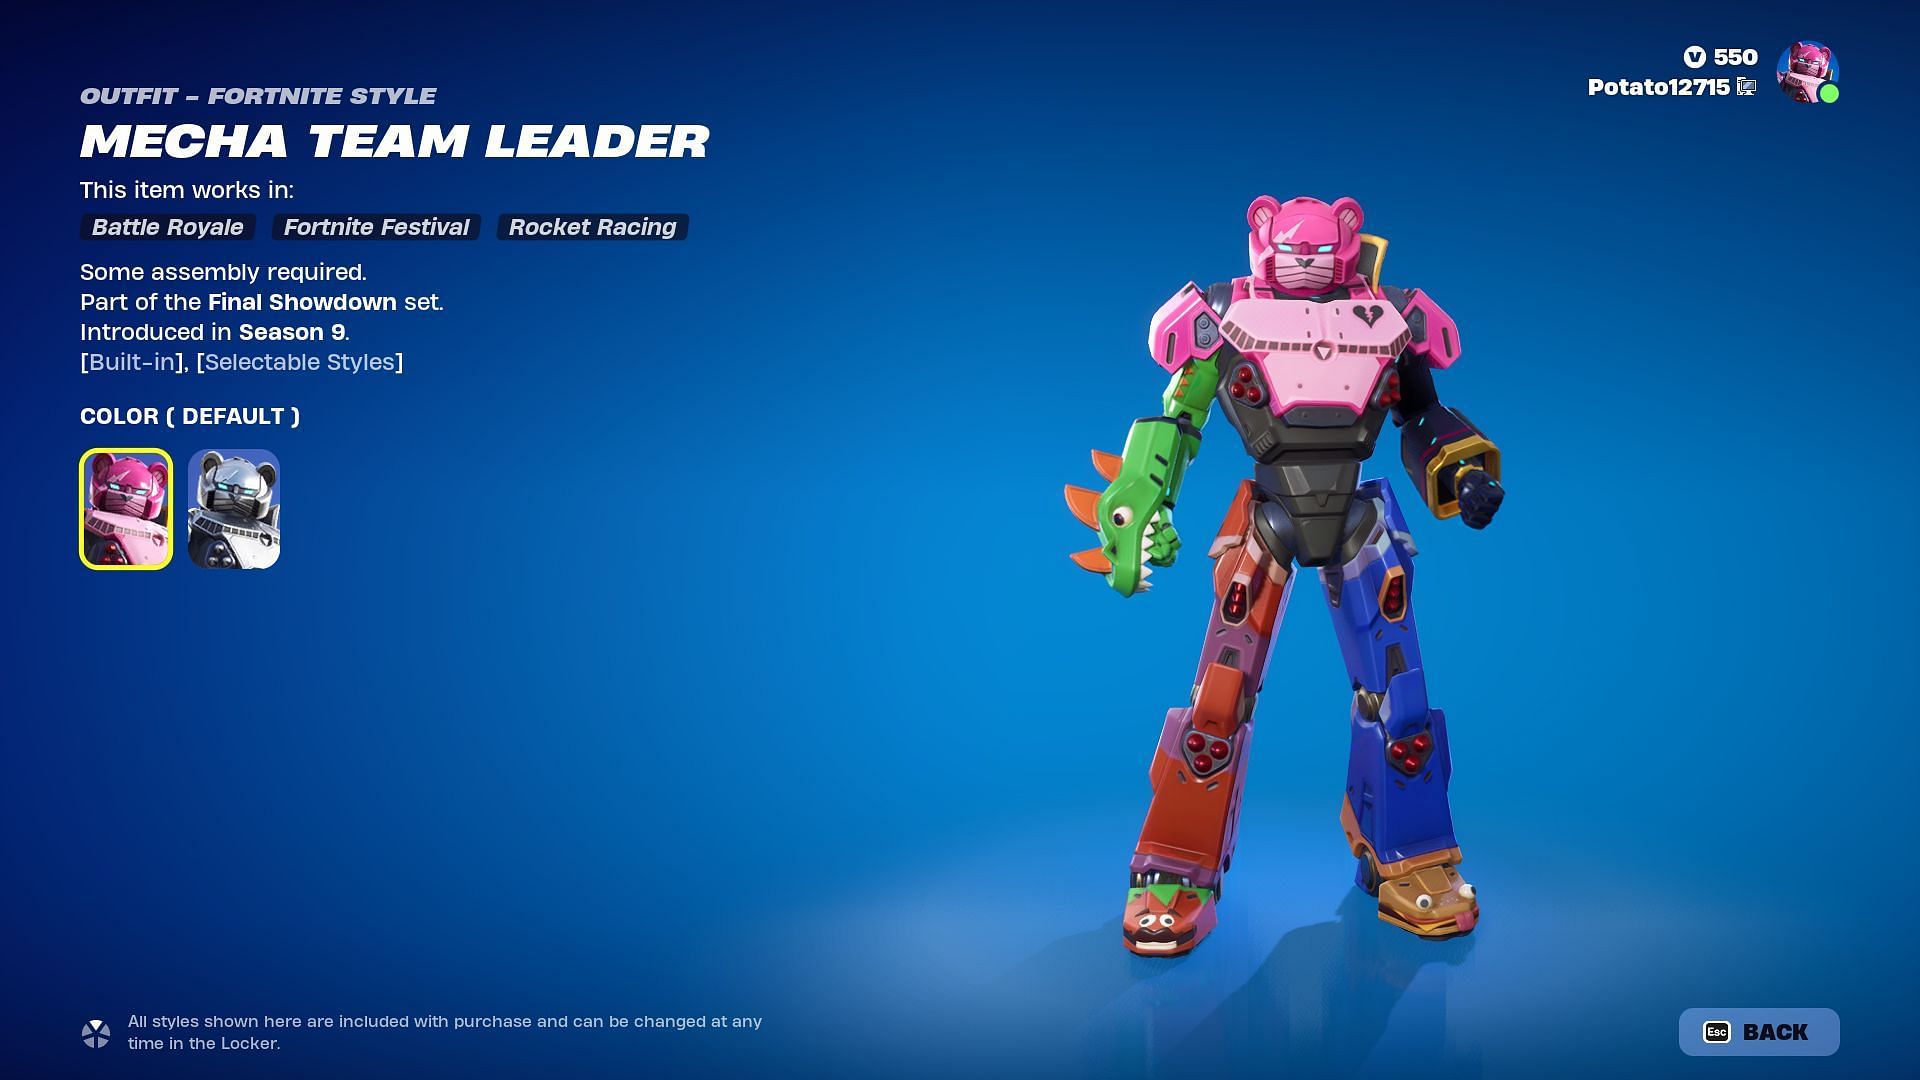 Mecha Team Leader skin is now in Fortnite (Image via Epic Games)